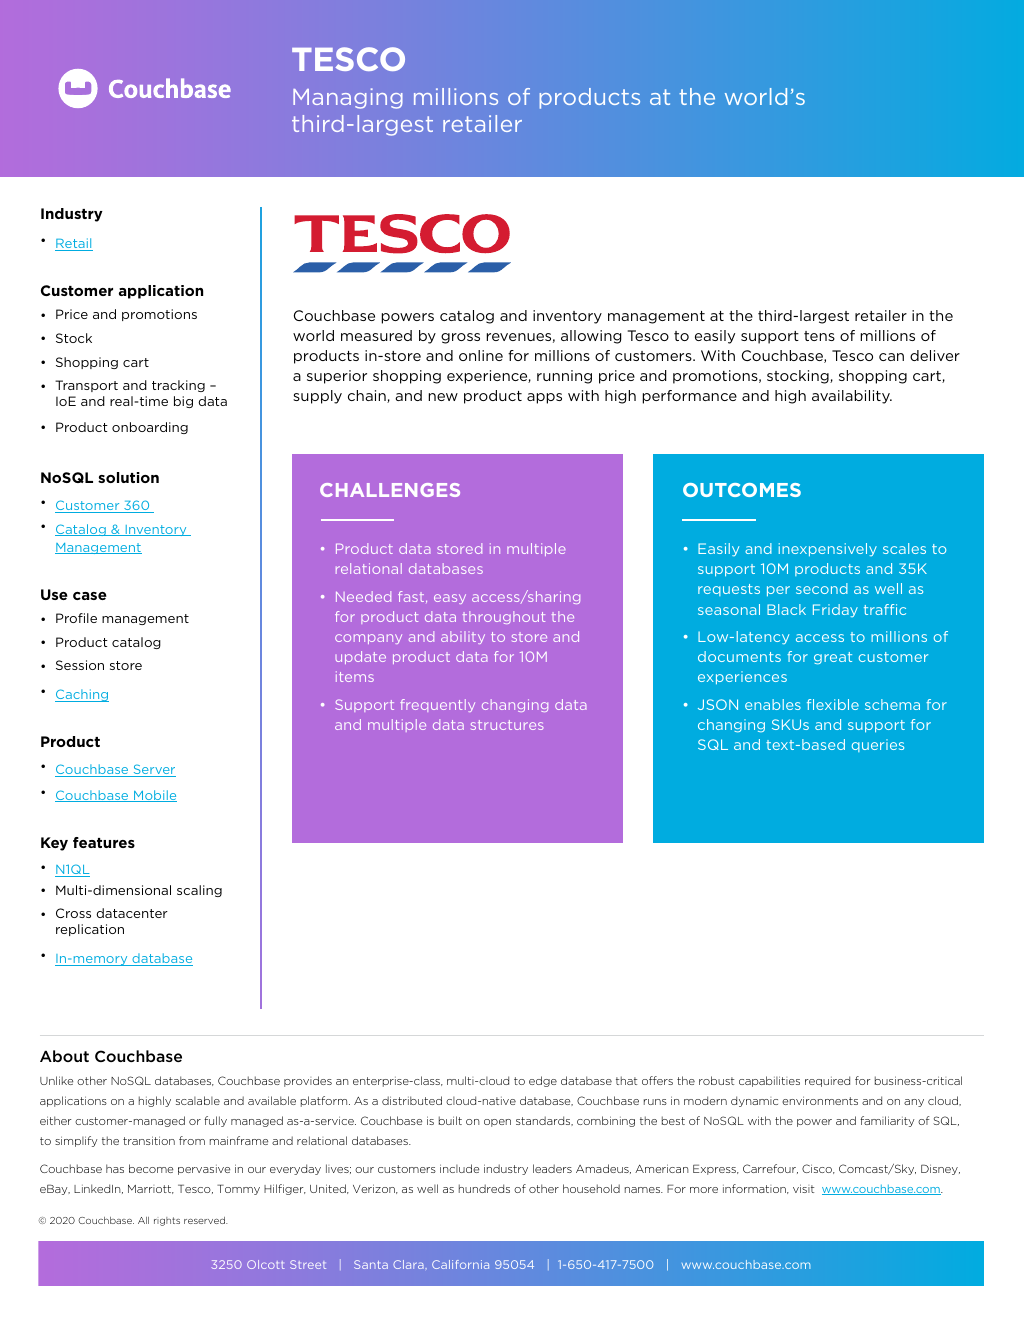 tesco information system case study